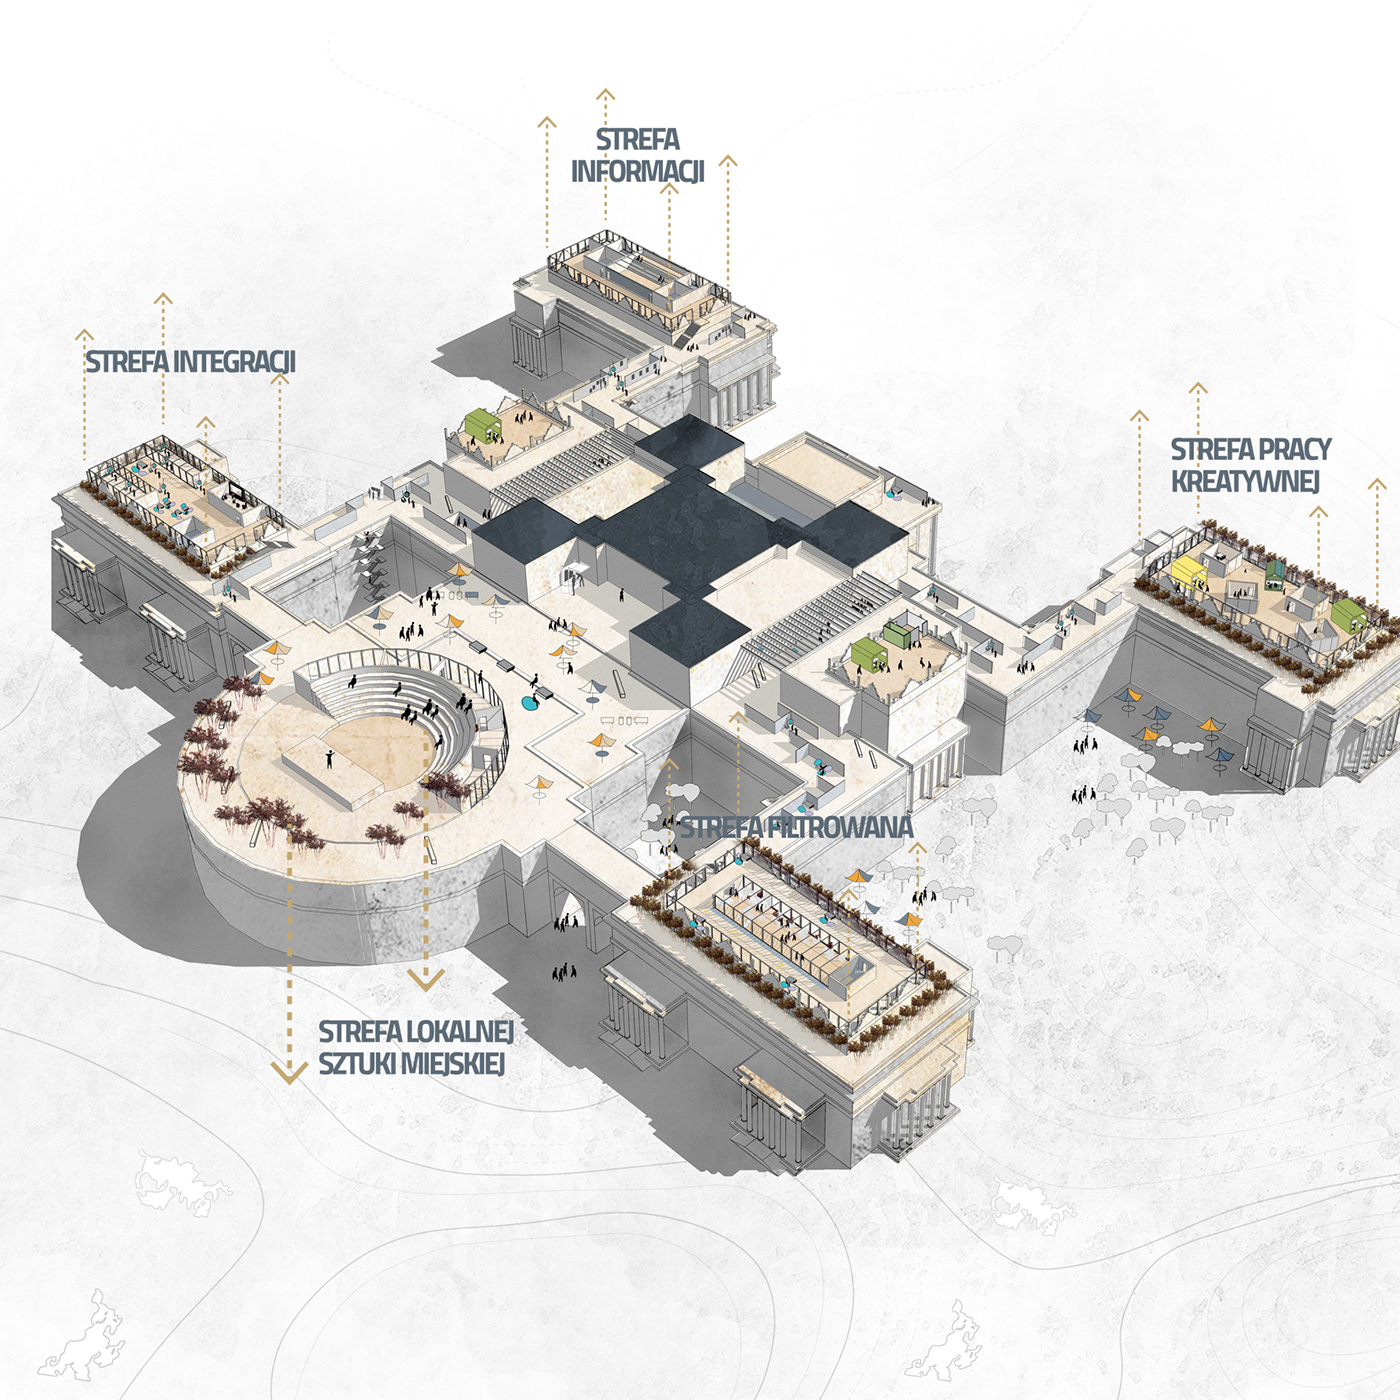 warsaw Transformation city centre pkin roof architecture monuments architecture visualization compatition